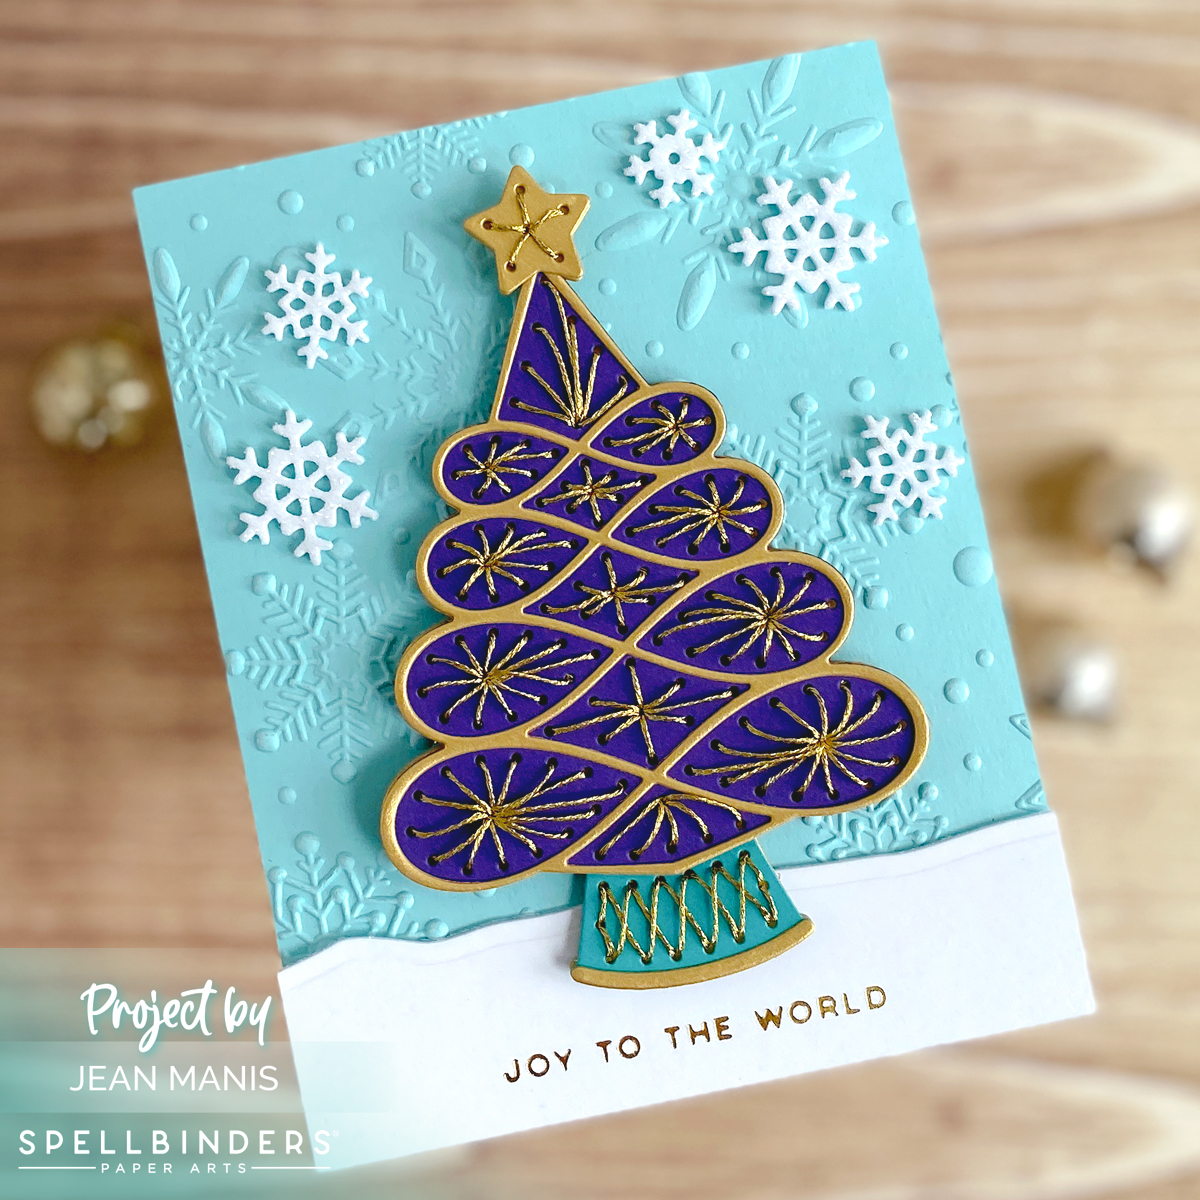 Spellbinders | Stitched Christmas Tree Card